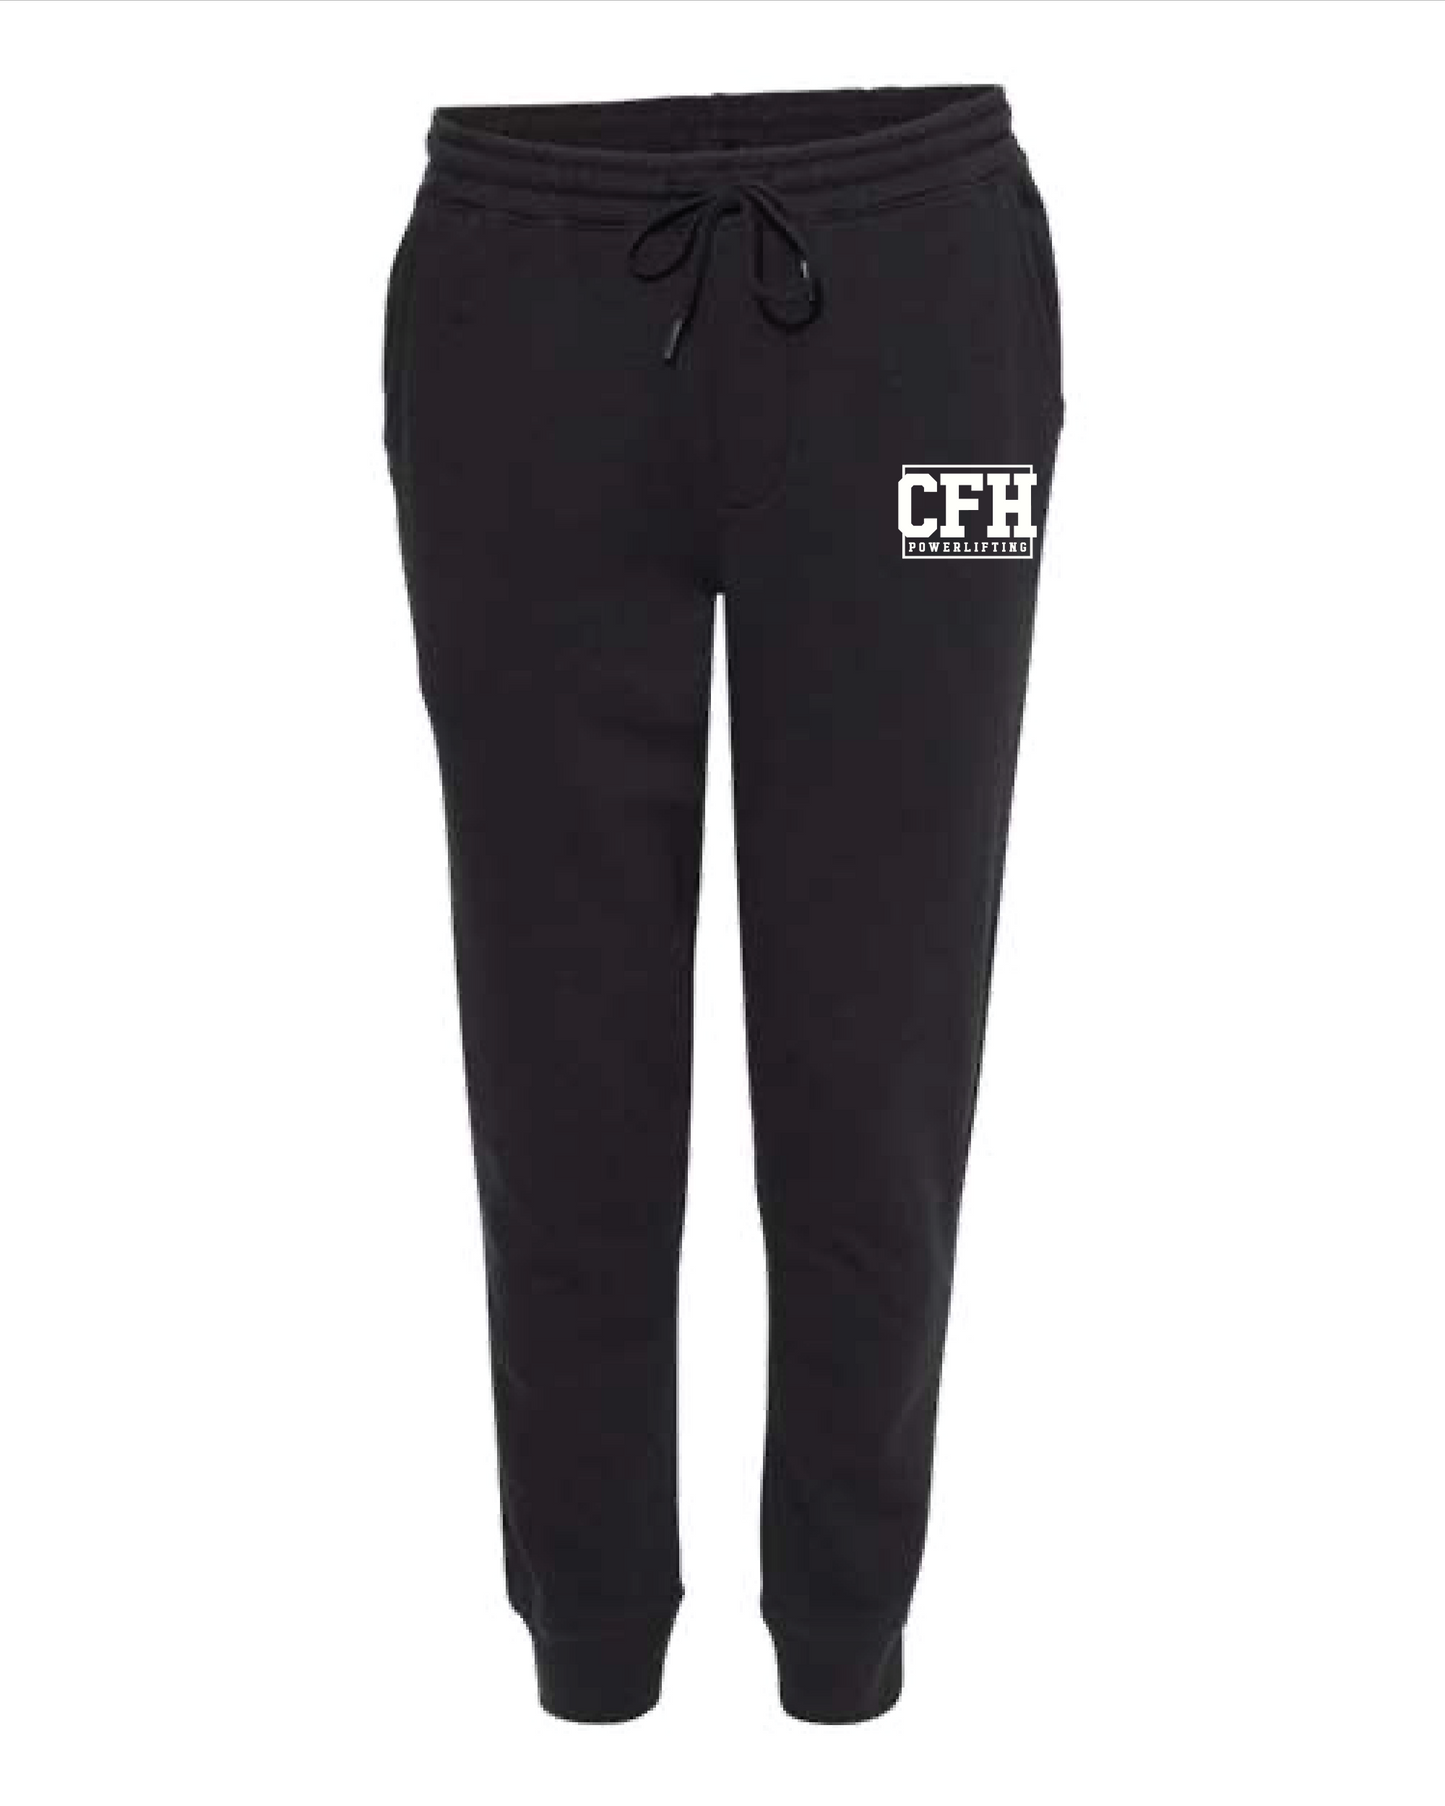 CFH Powerlifting - Midweight Fleece Pants